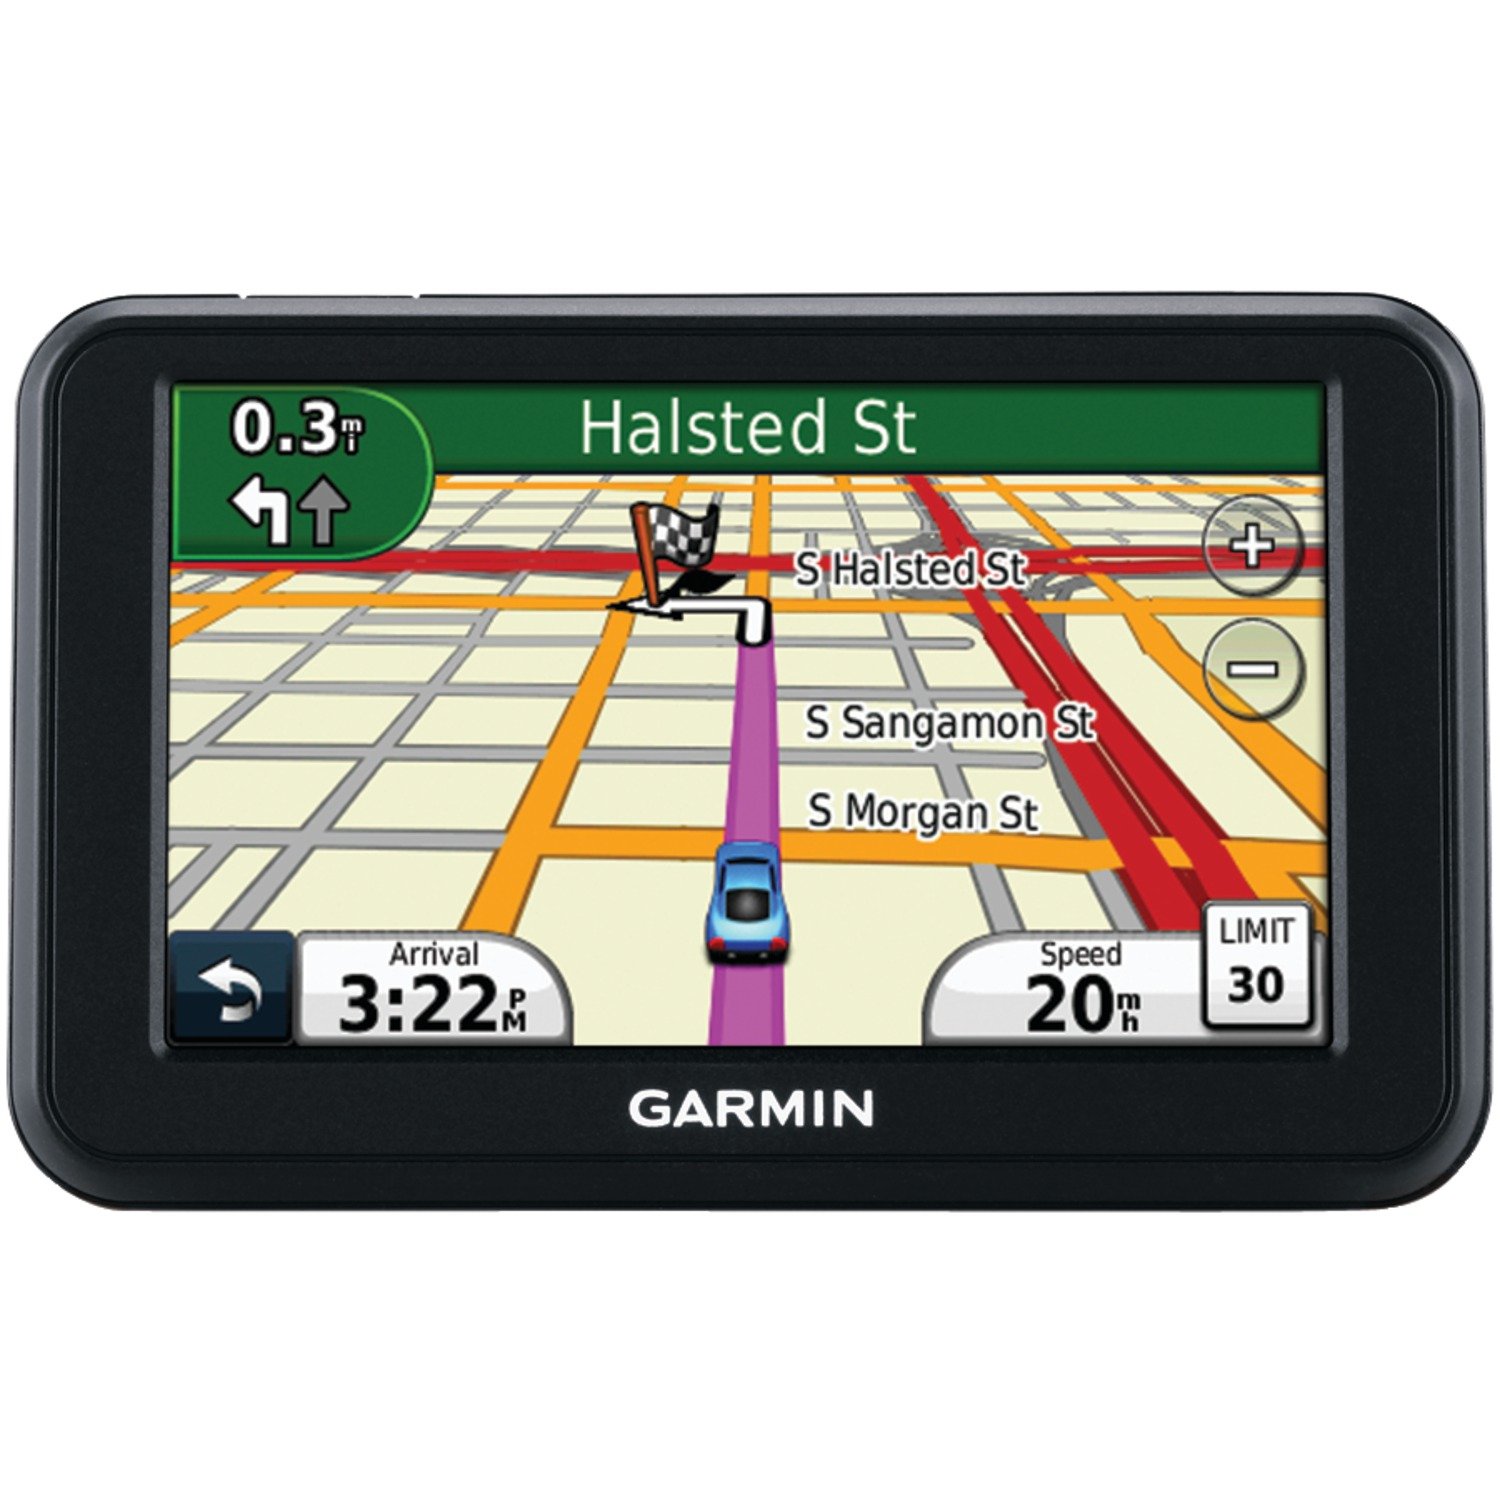 Garmin nüvi 40LM 4.3-Inch Portable GPS Navigator with Lifetime Maps (US and Canada)